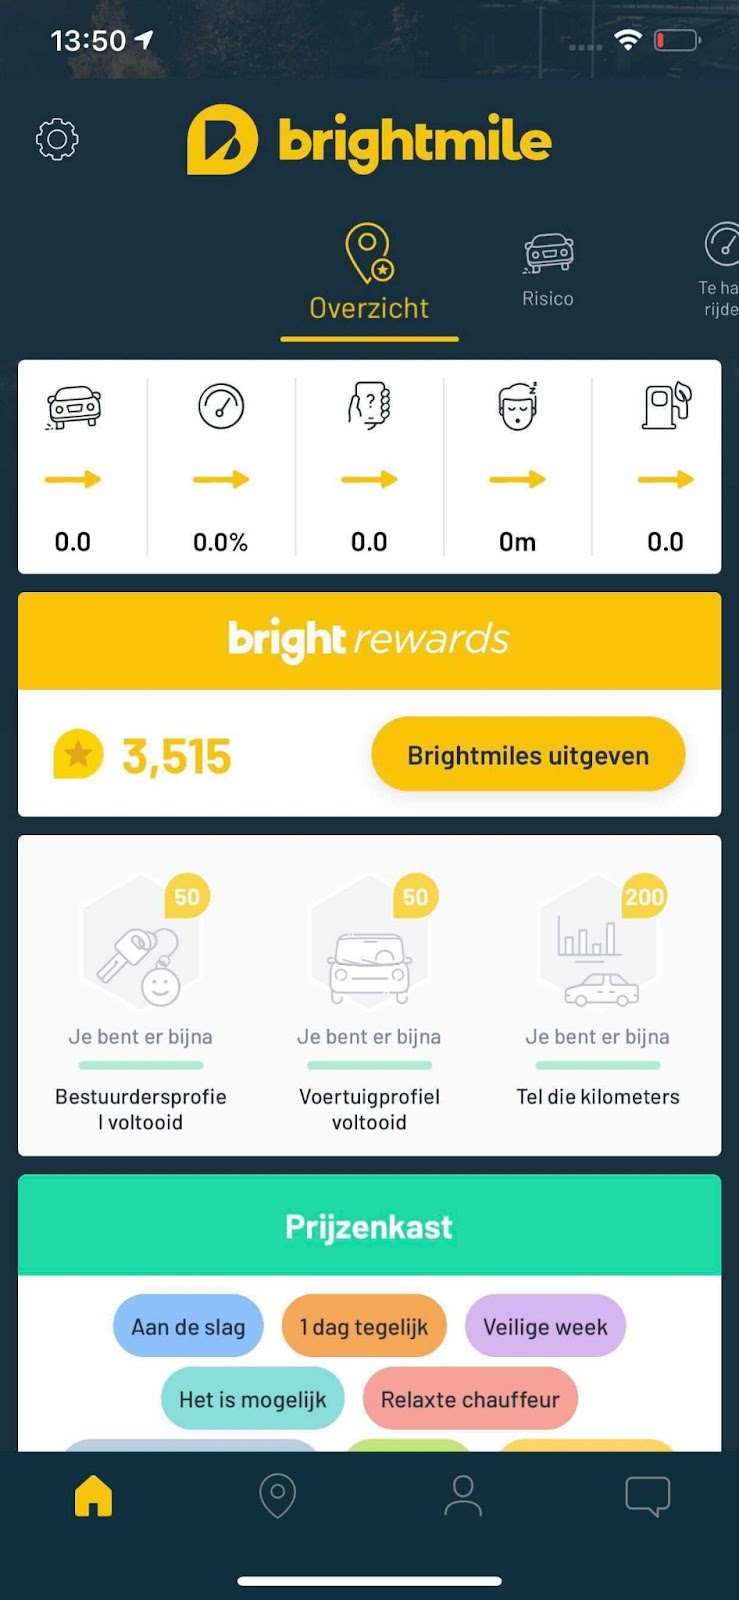 Brightmile App in Dutch